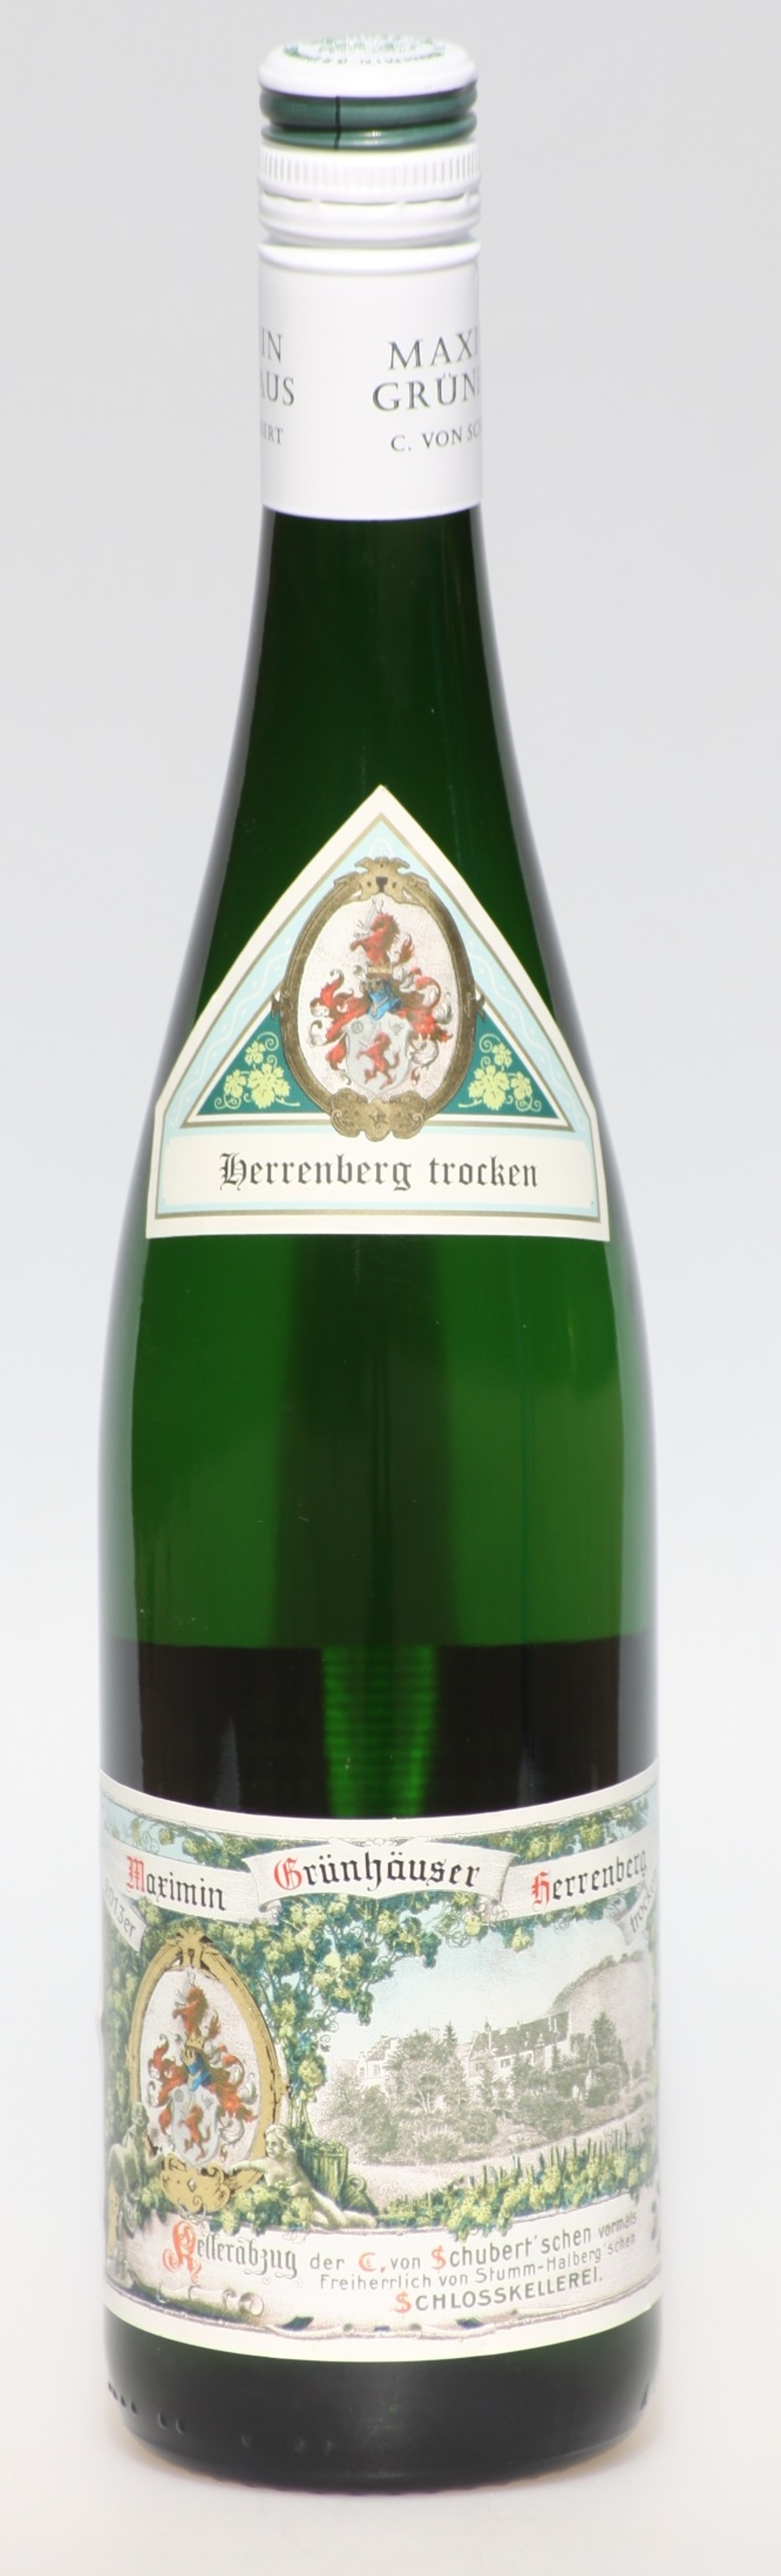 Wein Maximin Grünhaus Herrenberg